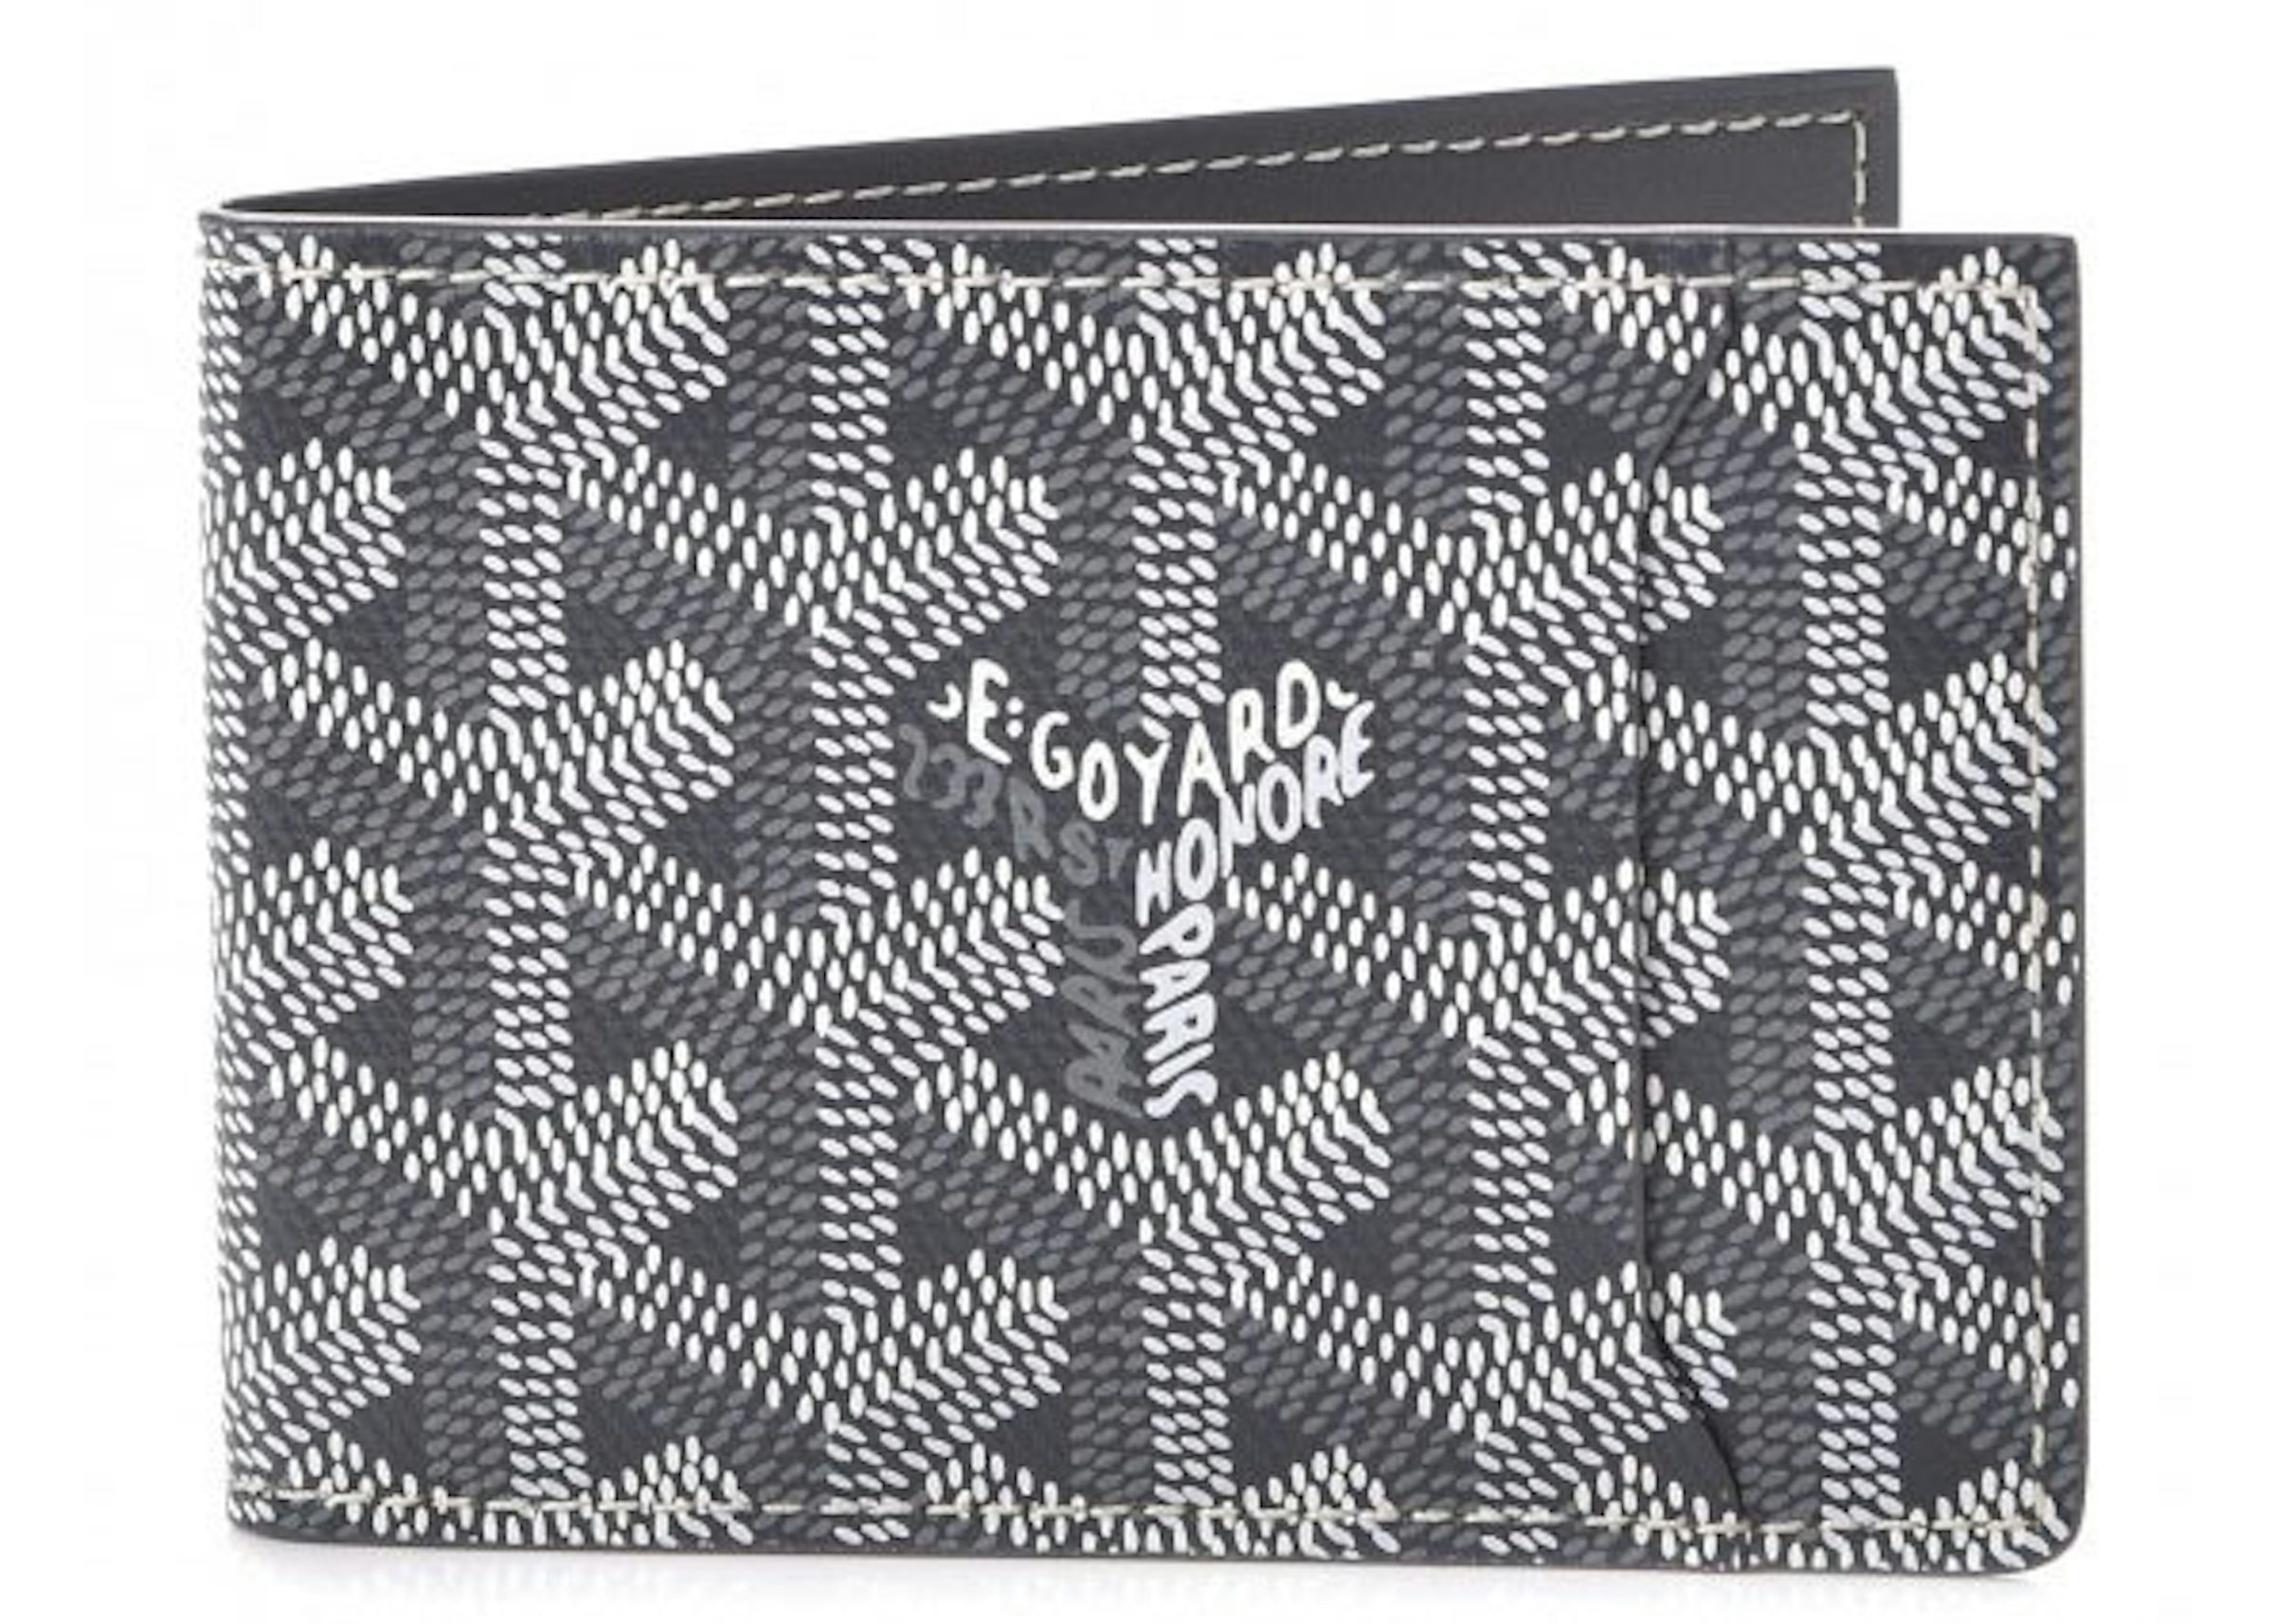 Goyard Victoire Men's Black Wallet YK Initials Custom